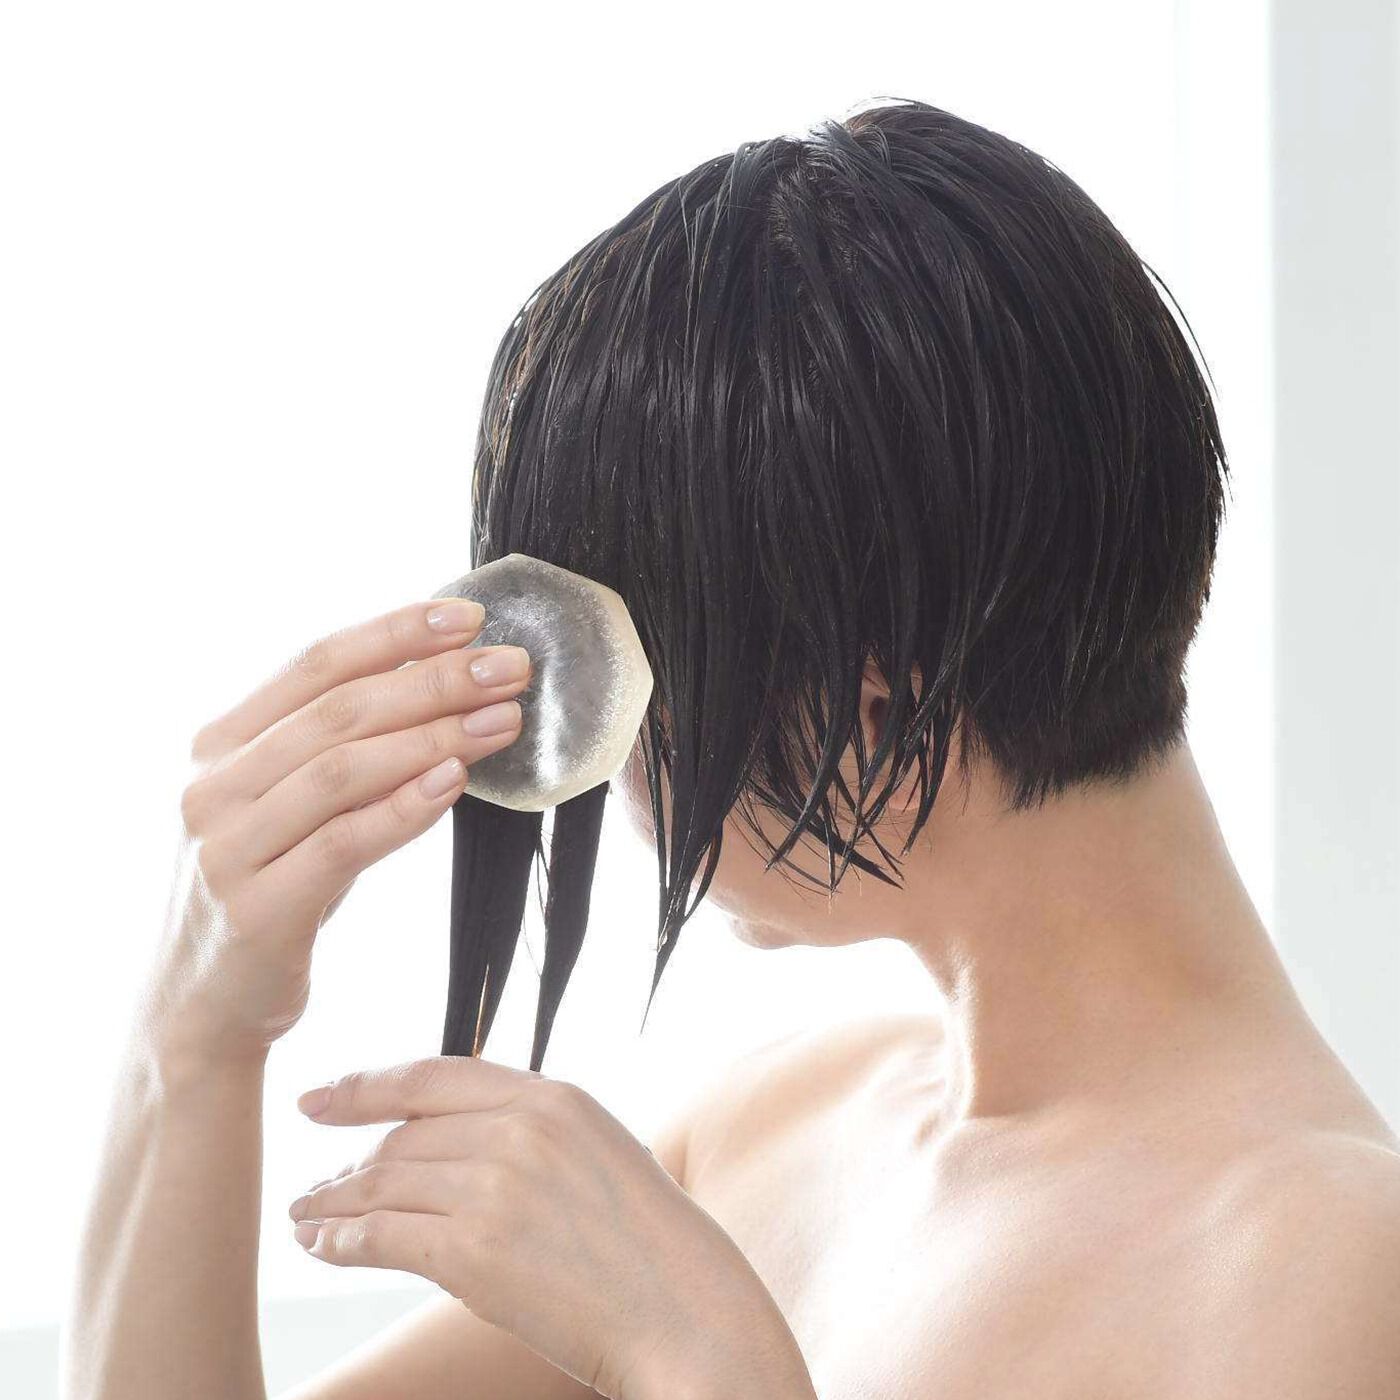 BEAUTY PROJECT|Koharubiyori　スカルプシャンプーバー　オレンジ＆ベルガモット〈天然へちま製トレイ付き〉|髪と頭皮を充分に濡らしたら、髪の付け根から毛先に向けて滑らせるように数回塗布します。